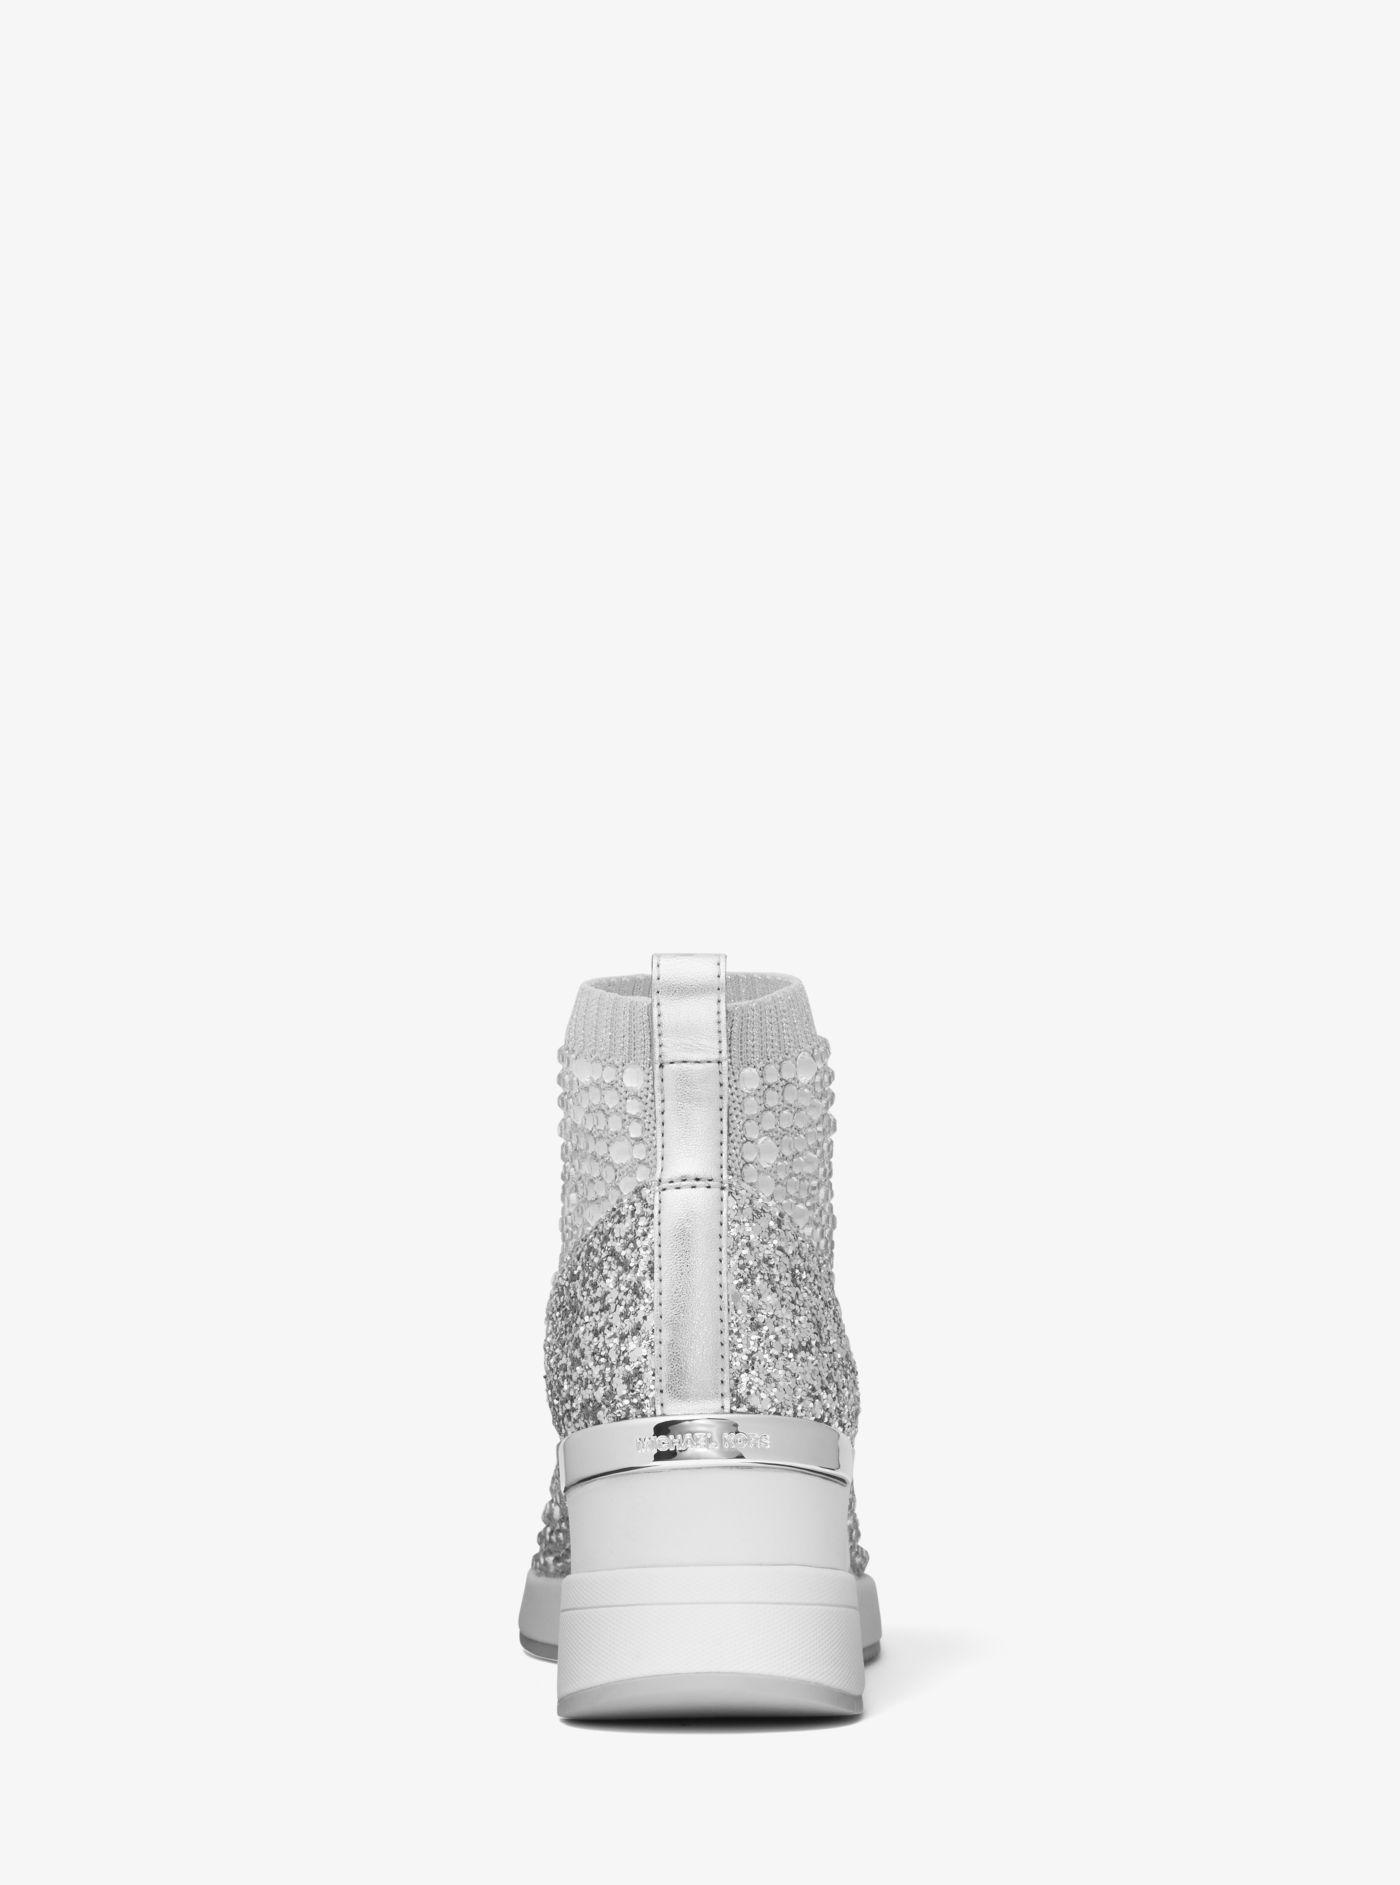 Michael Kors Skyler Crystal Embellished Metallic Stretch Knit Sock Sneaker  | Lyst